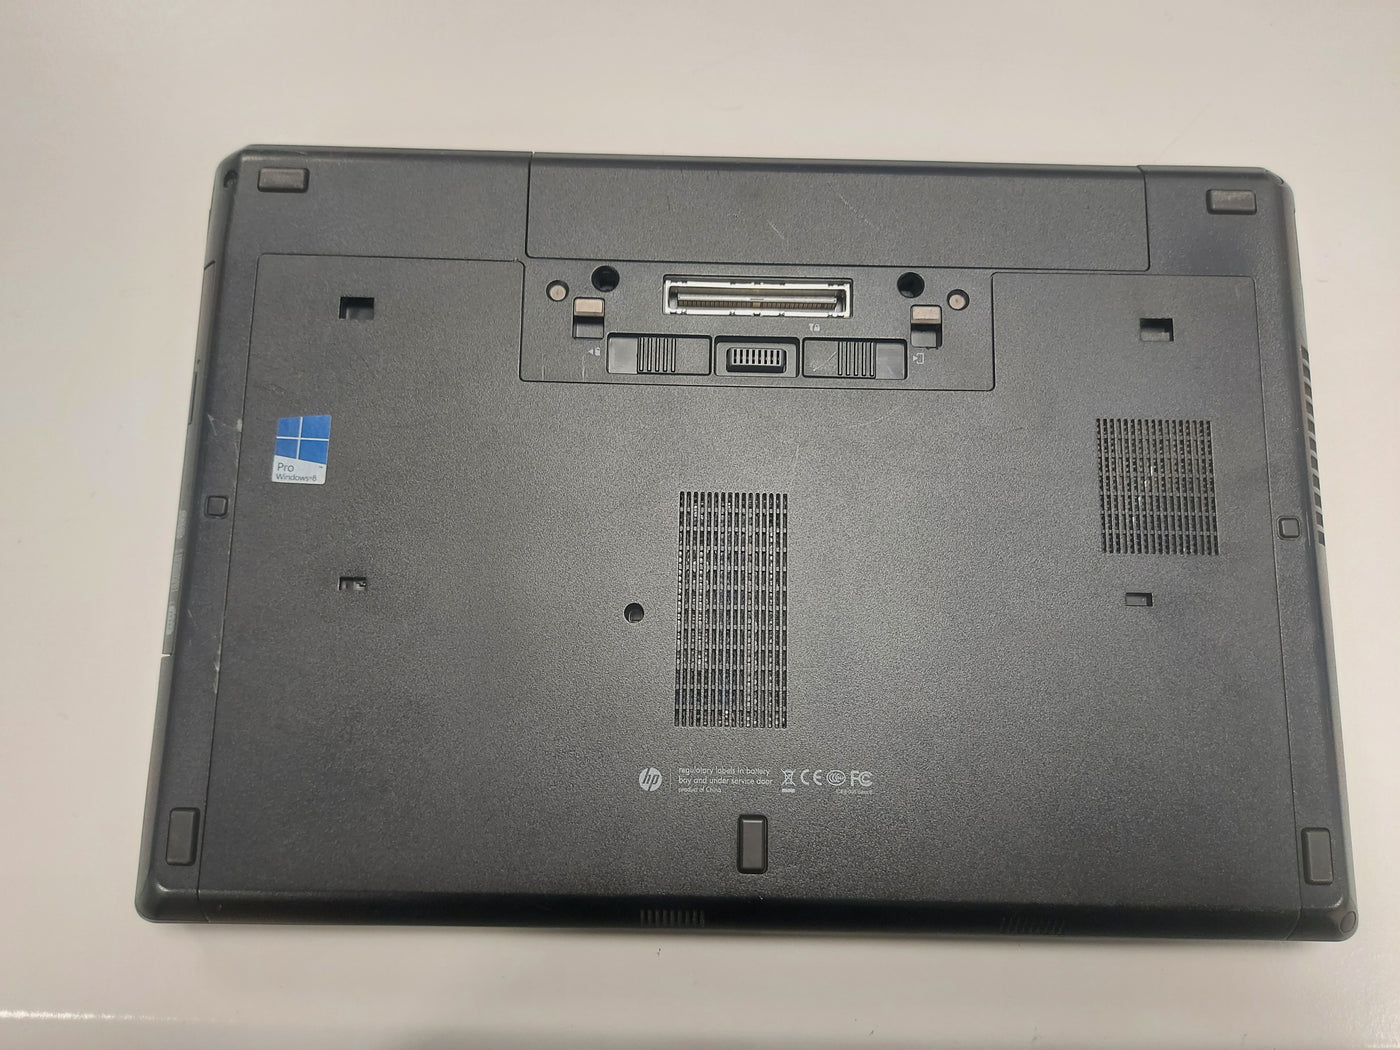 HP ProBook 6570b 250GB HDD Core i3-3110M 2400MHz 4GB RAM 15.6" Laptop ( 6570b ) USED